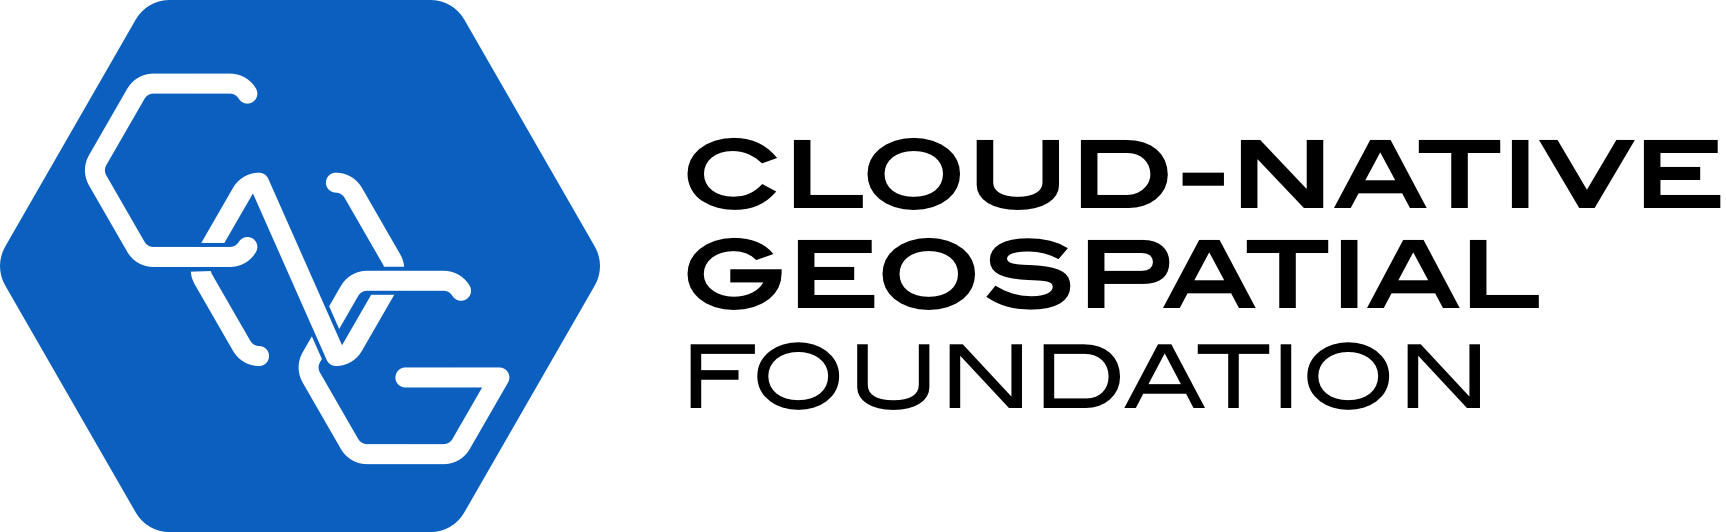 Cloud-Native Geospatial Foundation